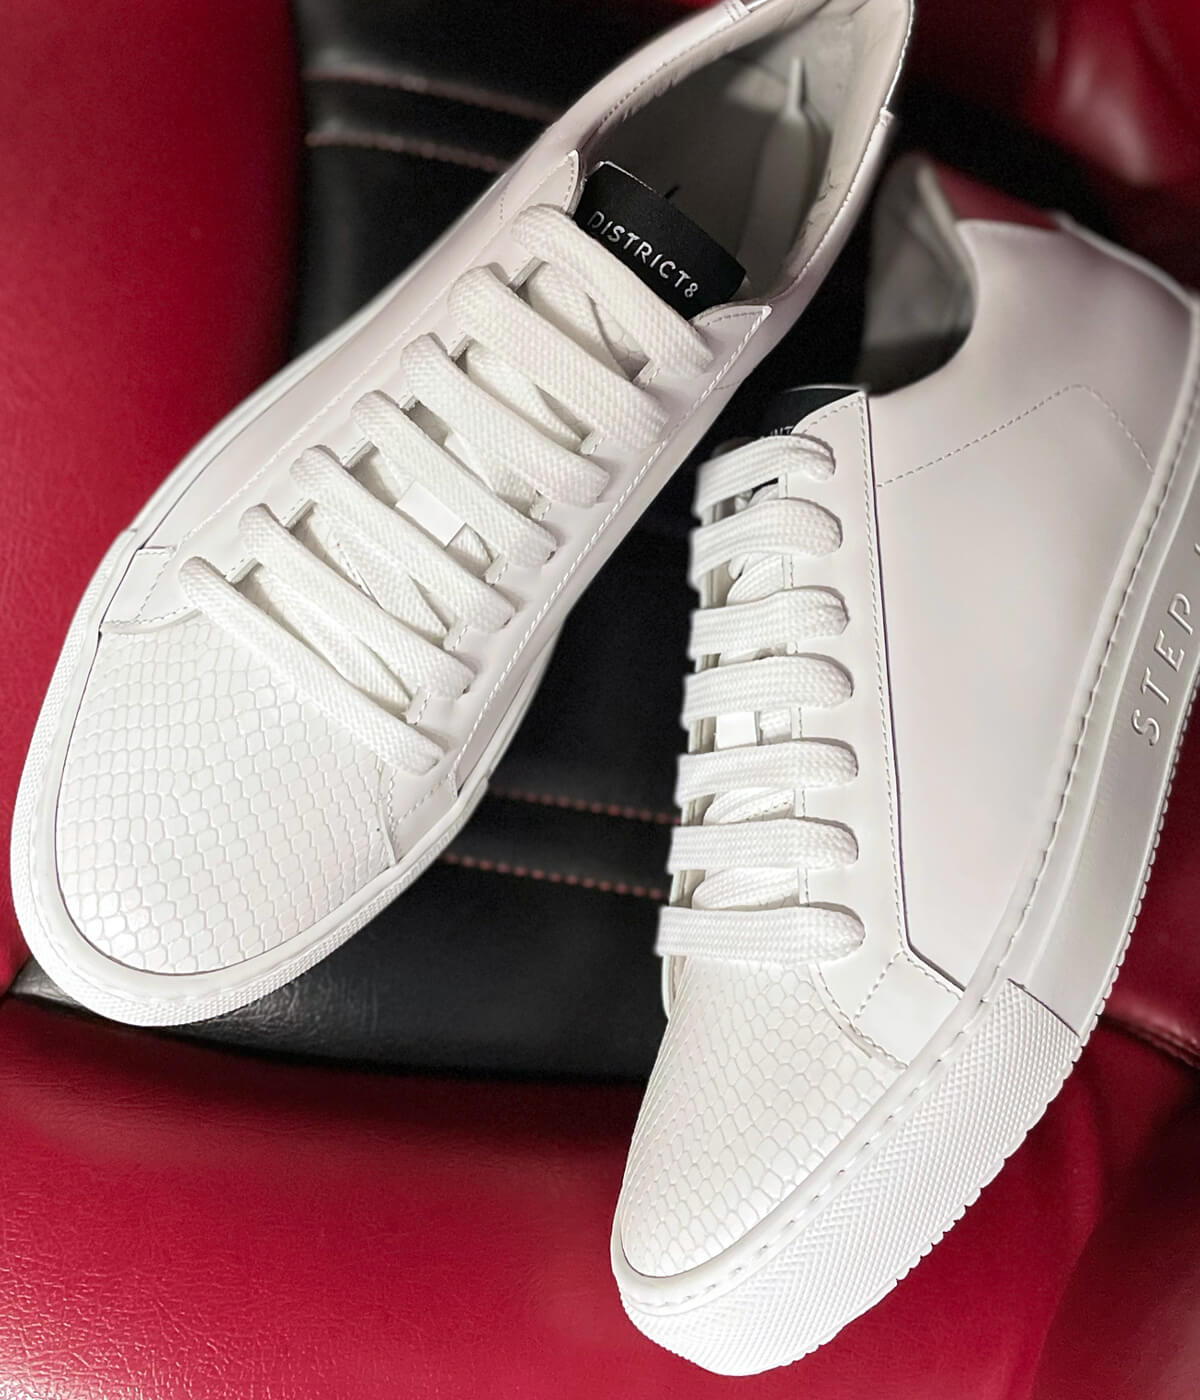 DISTRICT8 - Sneakers Wet Paint (842) in pelle gommata bianca, punta in rettile stampato e logo laserizzato